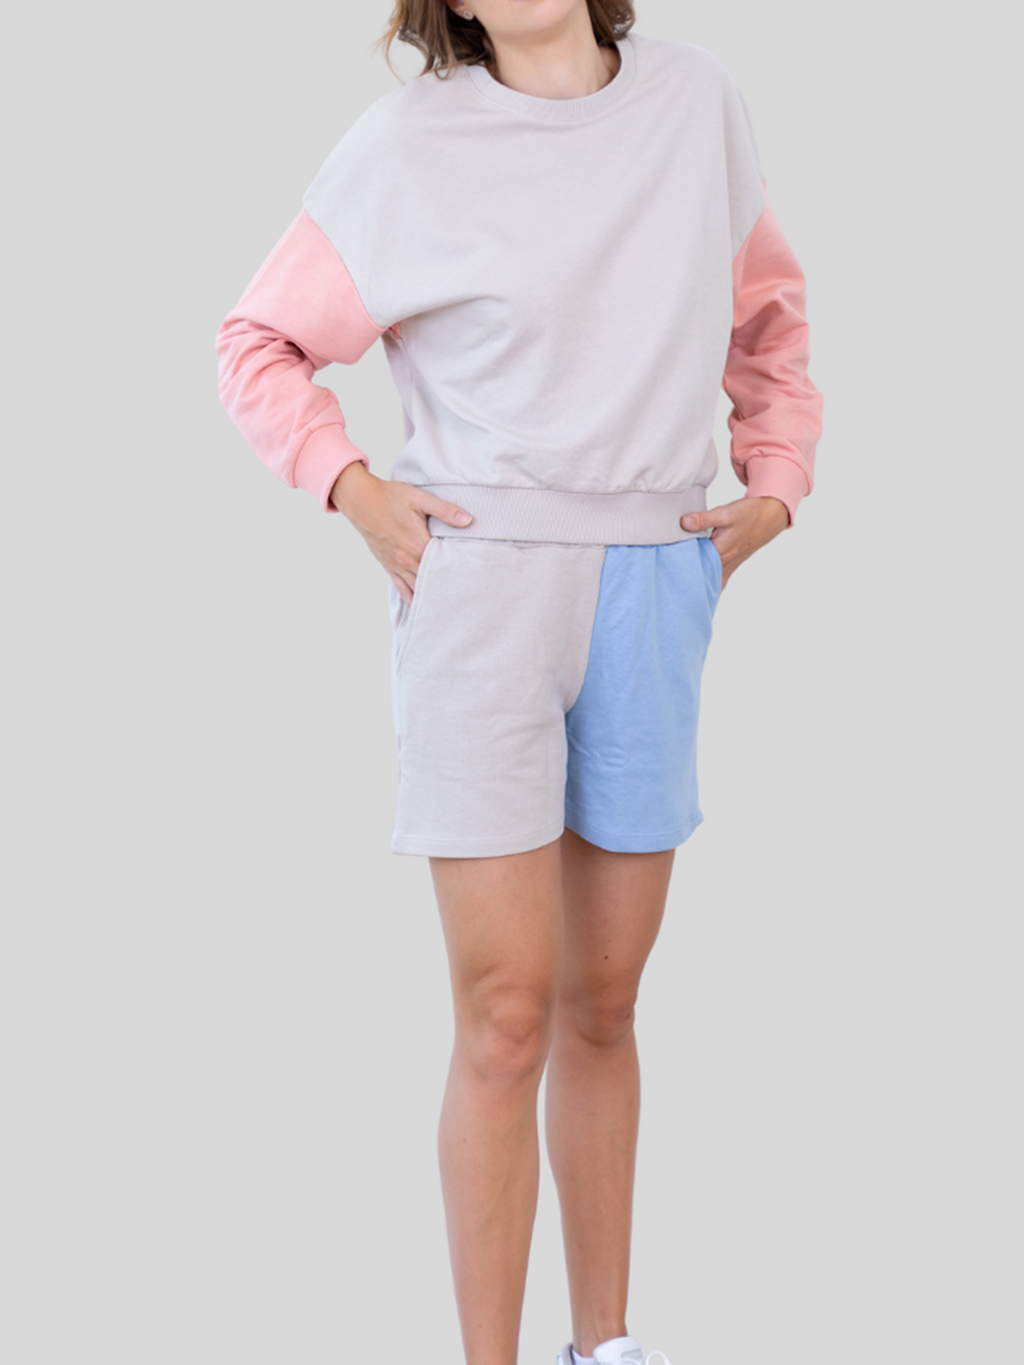 Mera Color Blocks Shorts - Sand/Blå